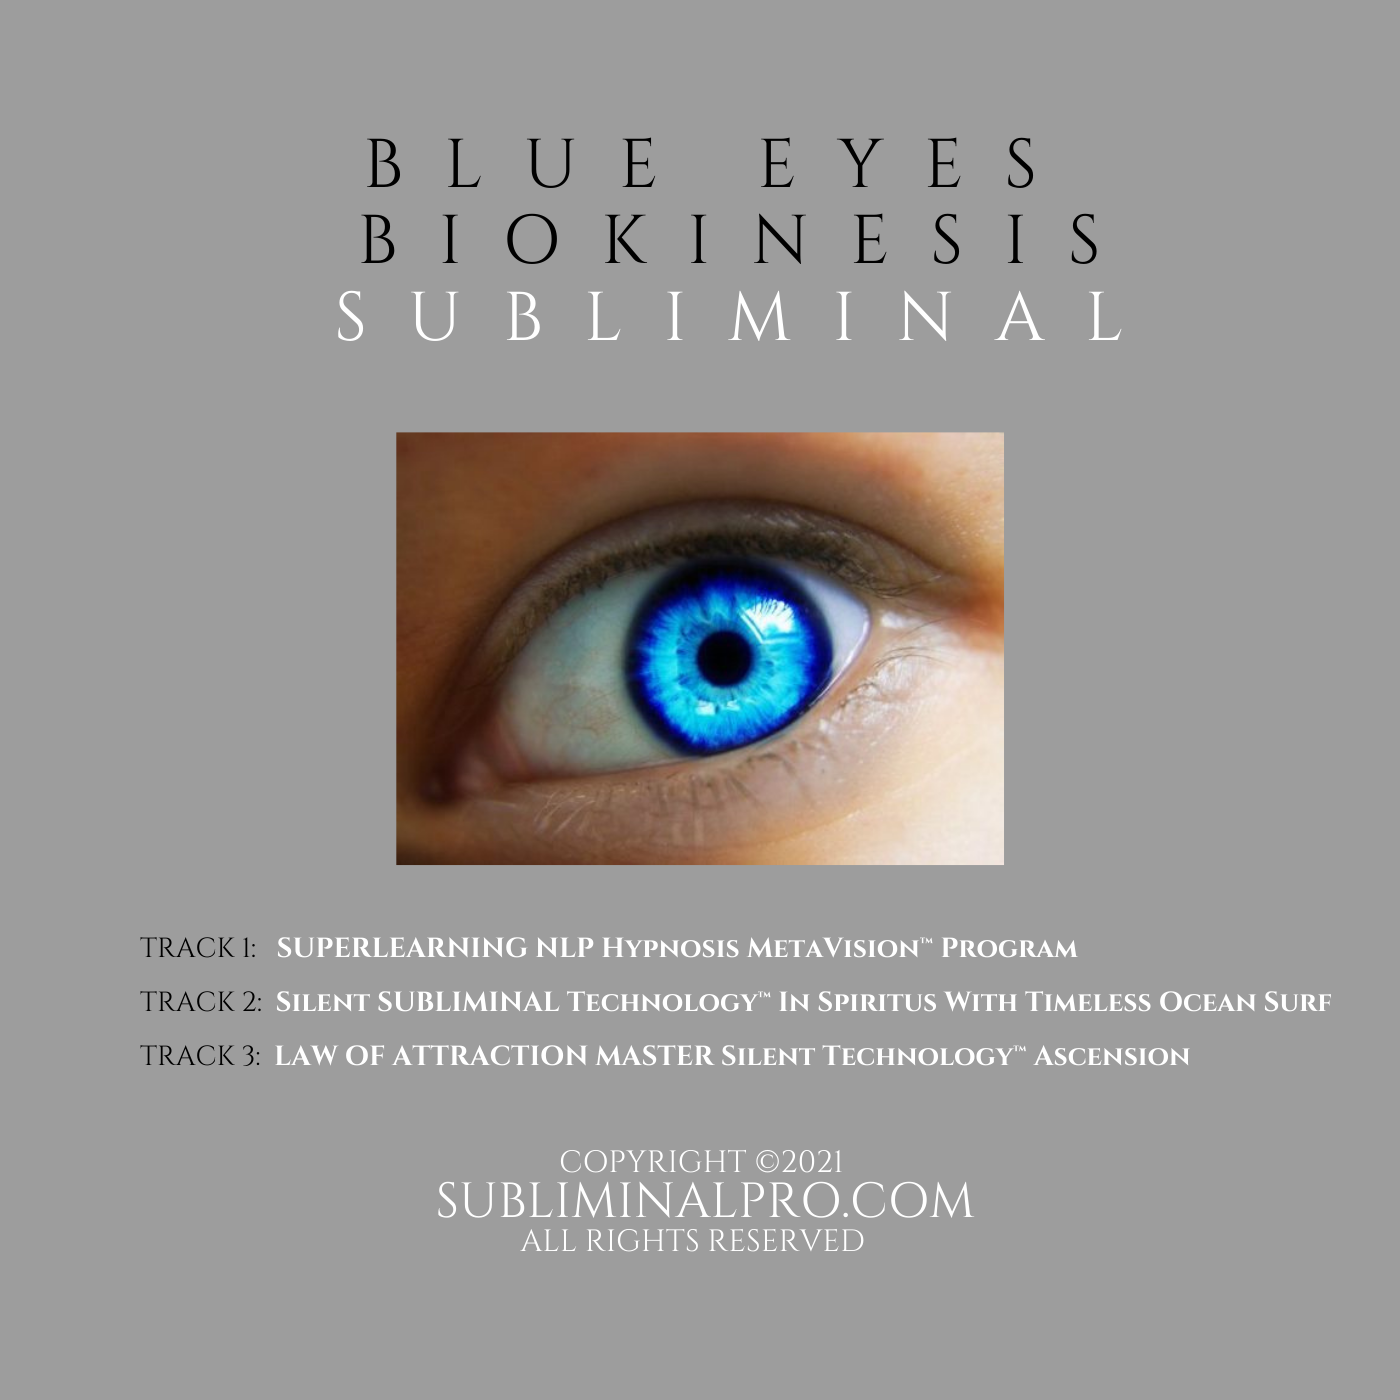 Golden Eyes Subliminal: Extremely Powerful Biokinesis to Get